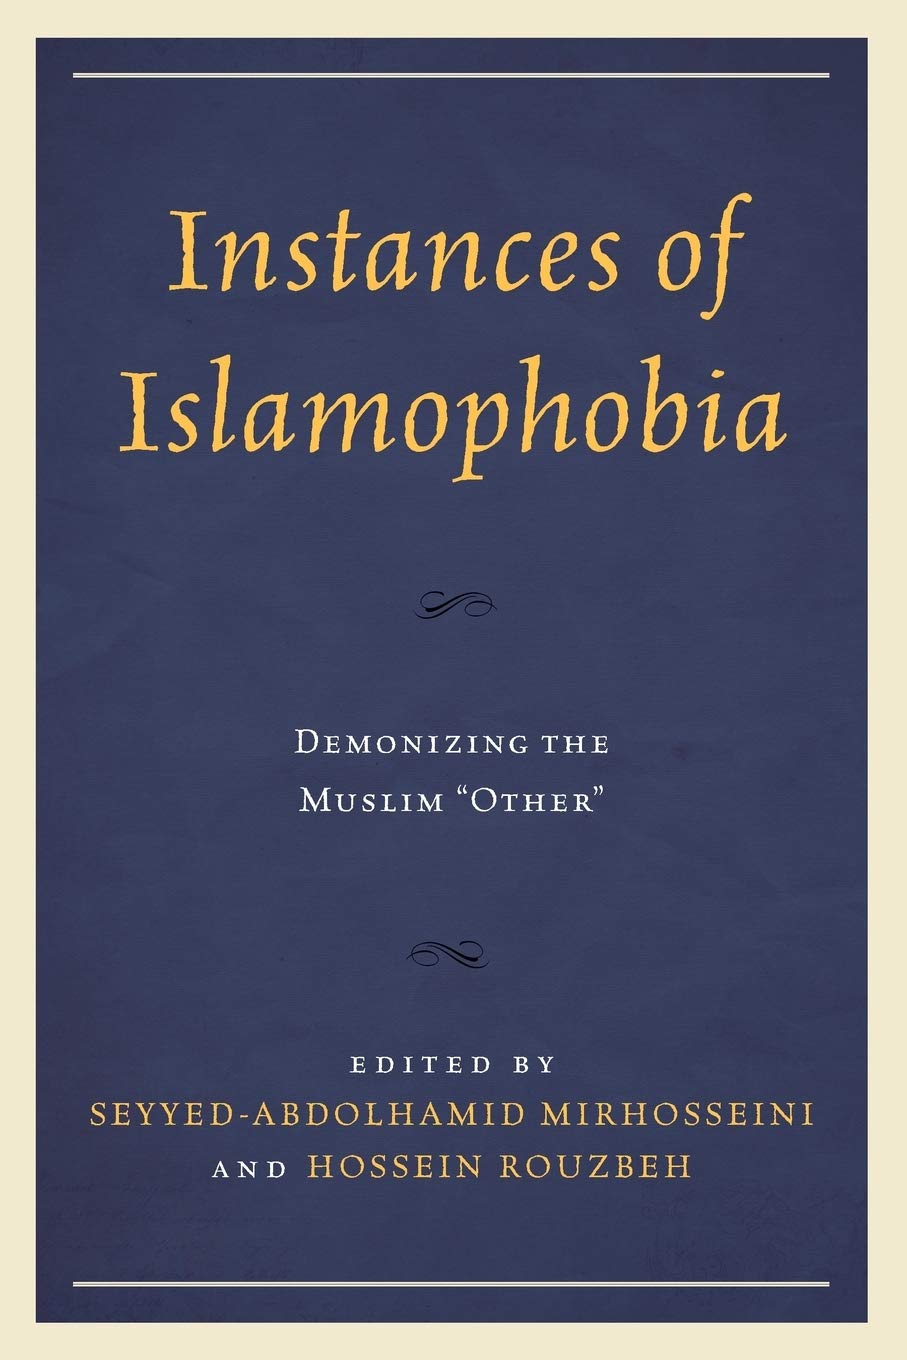 Instances of Islamophobia: Demonizing the Muslim "Other" - Seyyed-Abdolhamid Mirhosseini, Hossein Rouzbeh (Editors), Nora Amath (Contributor)